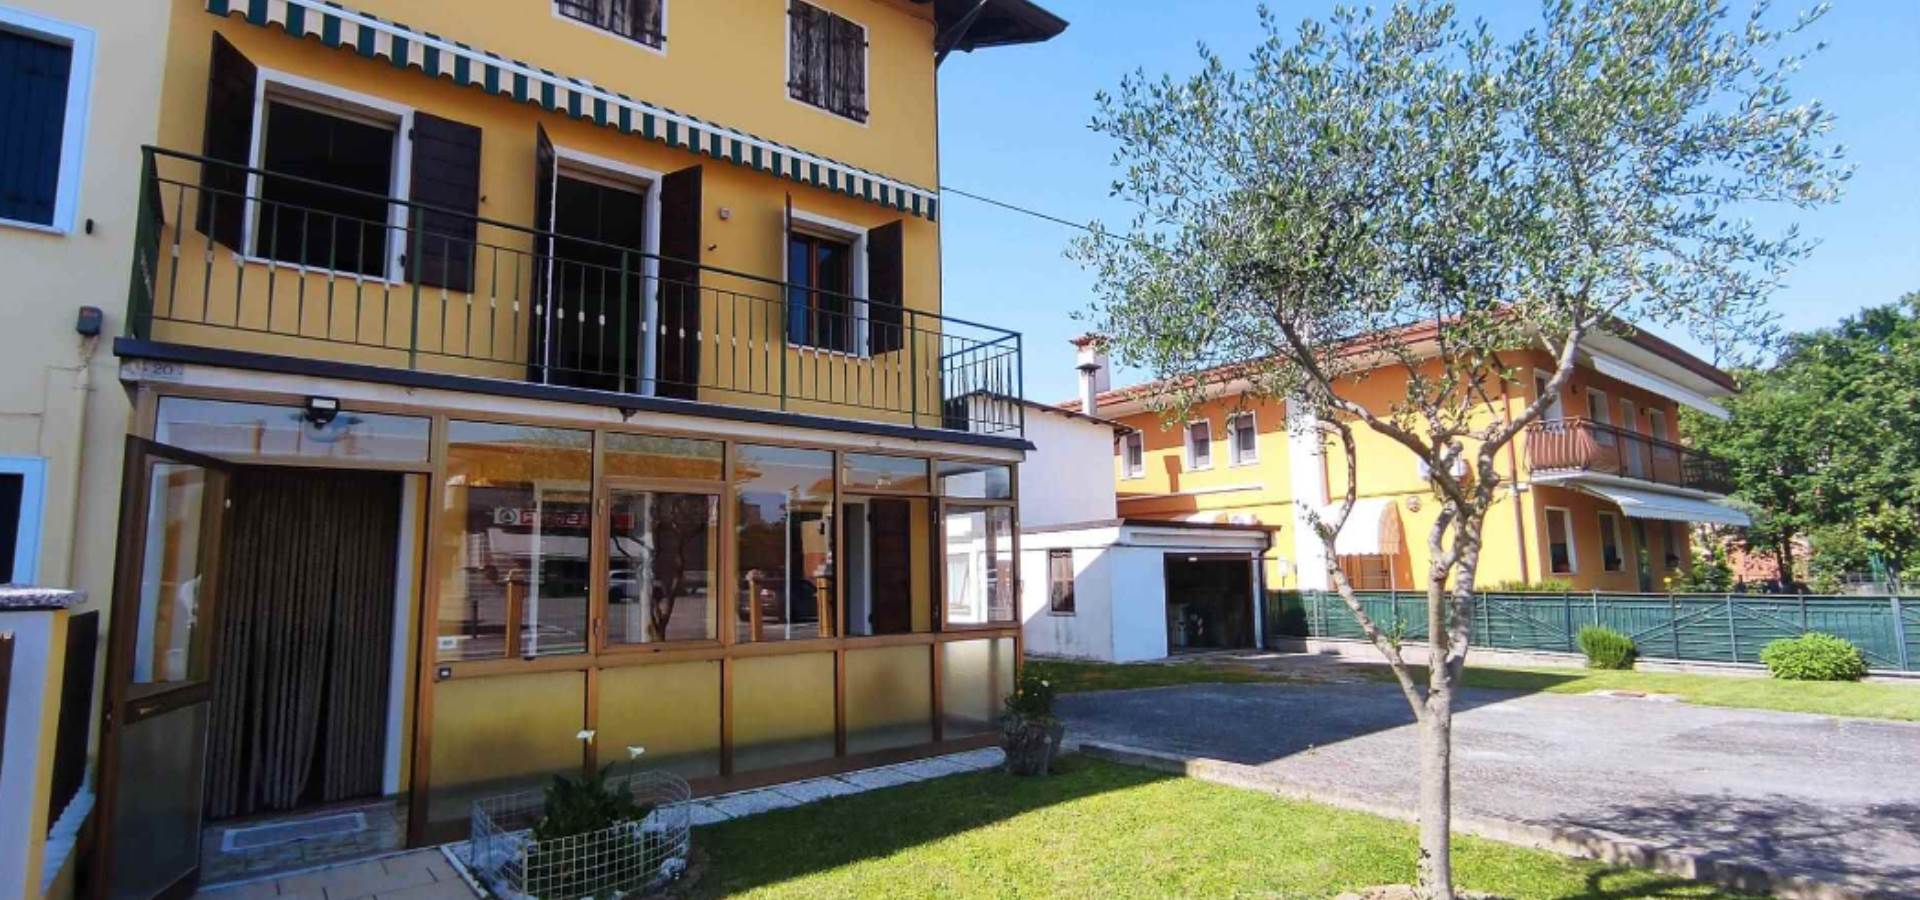 FOSSALTA DI PORTOGRUARO, Duplex villa for sale of 405 Sq. mt., Habitable, Heating Individual heating system, Energetic class: G, Epi: 448,74 kwh/m2 